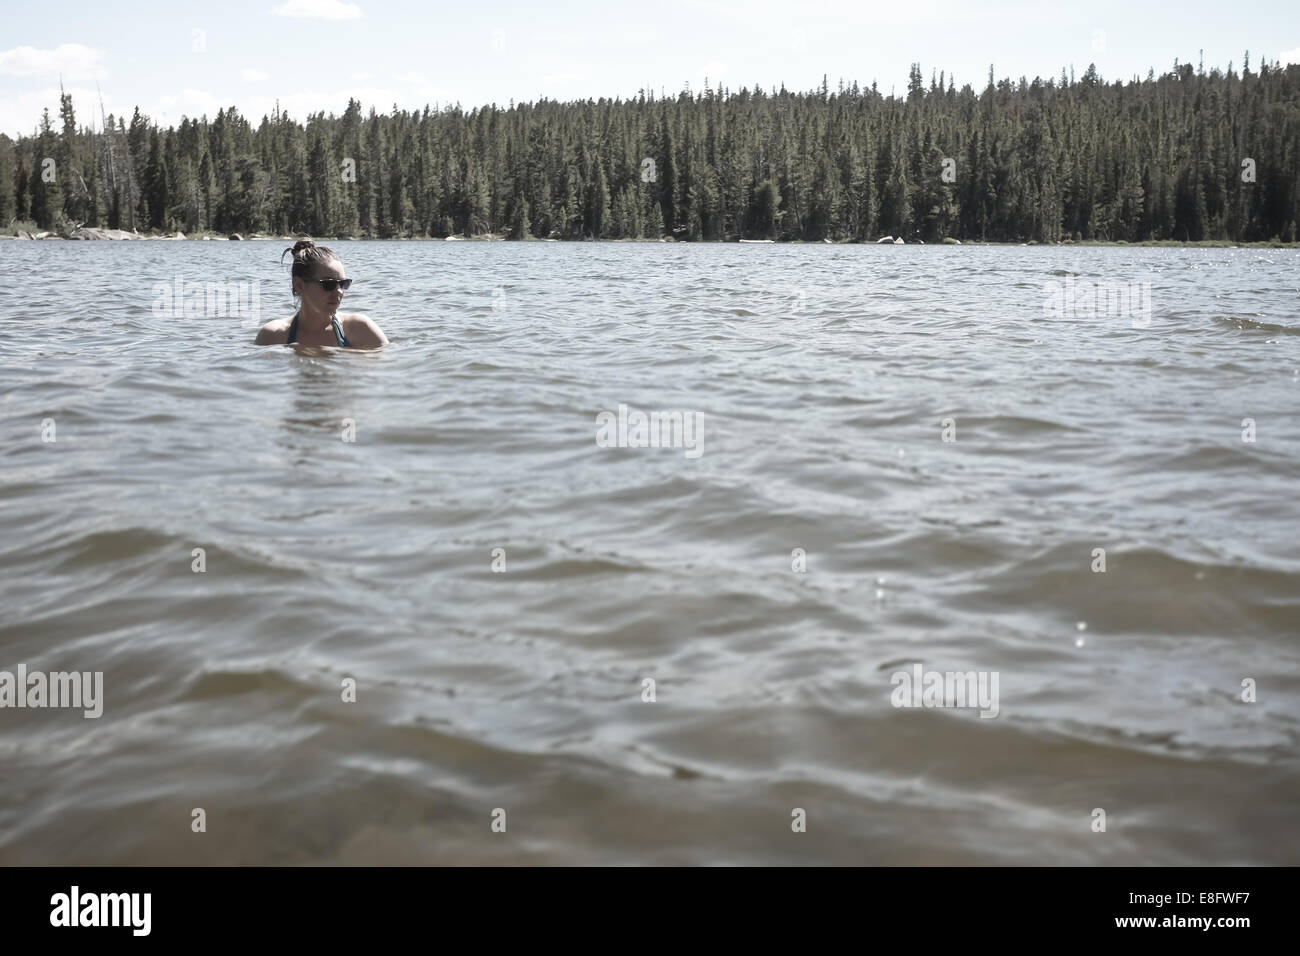 USA, Wyoming, Woman swimming in mountain lake Stock Photo